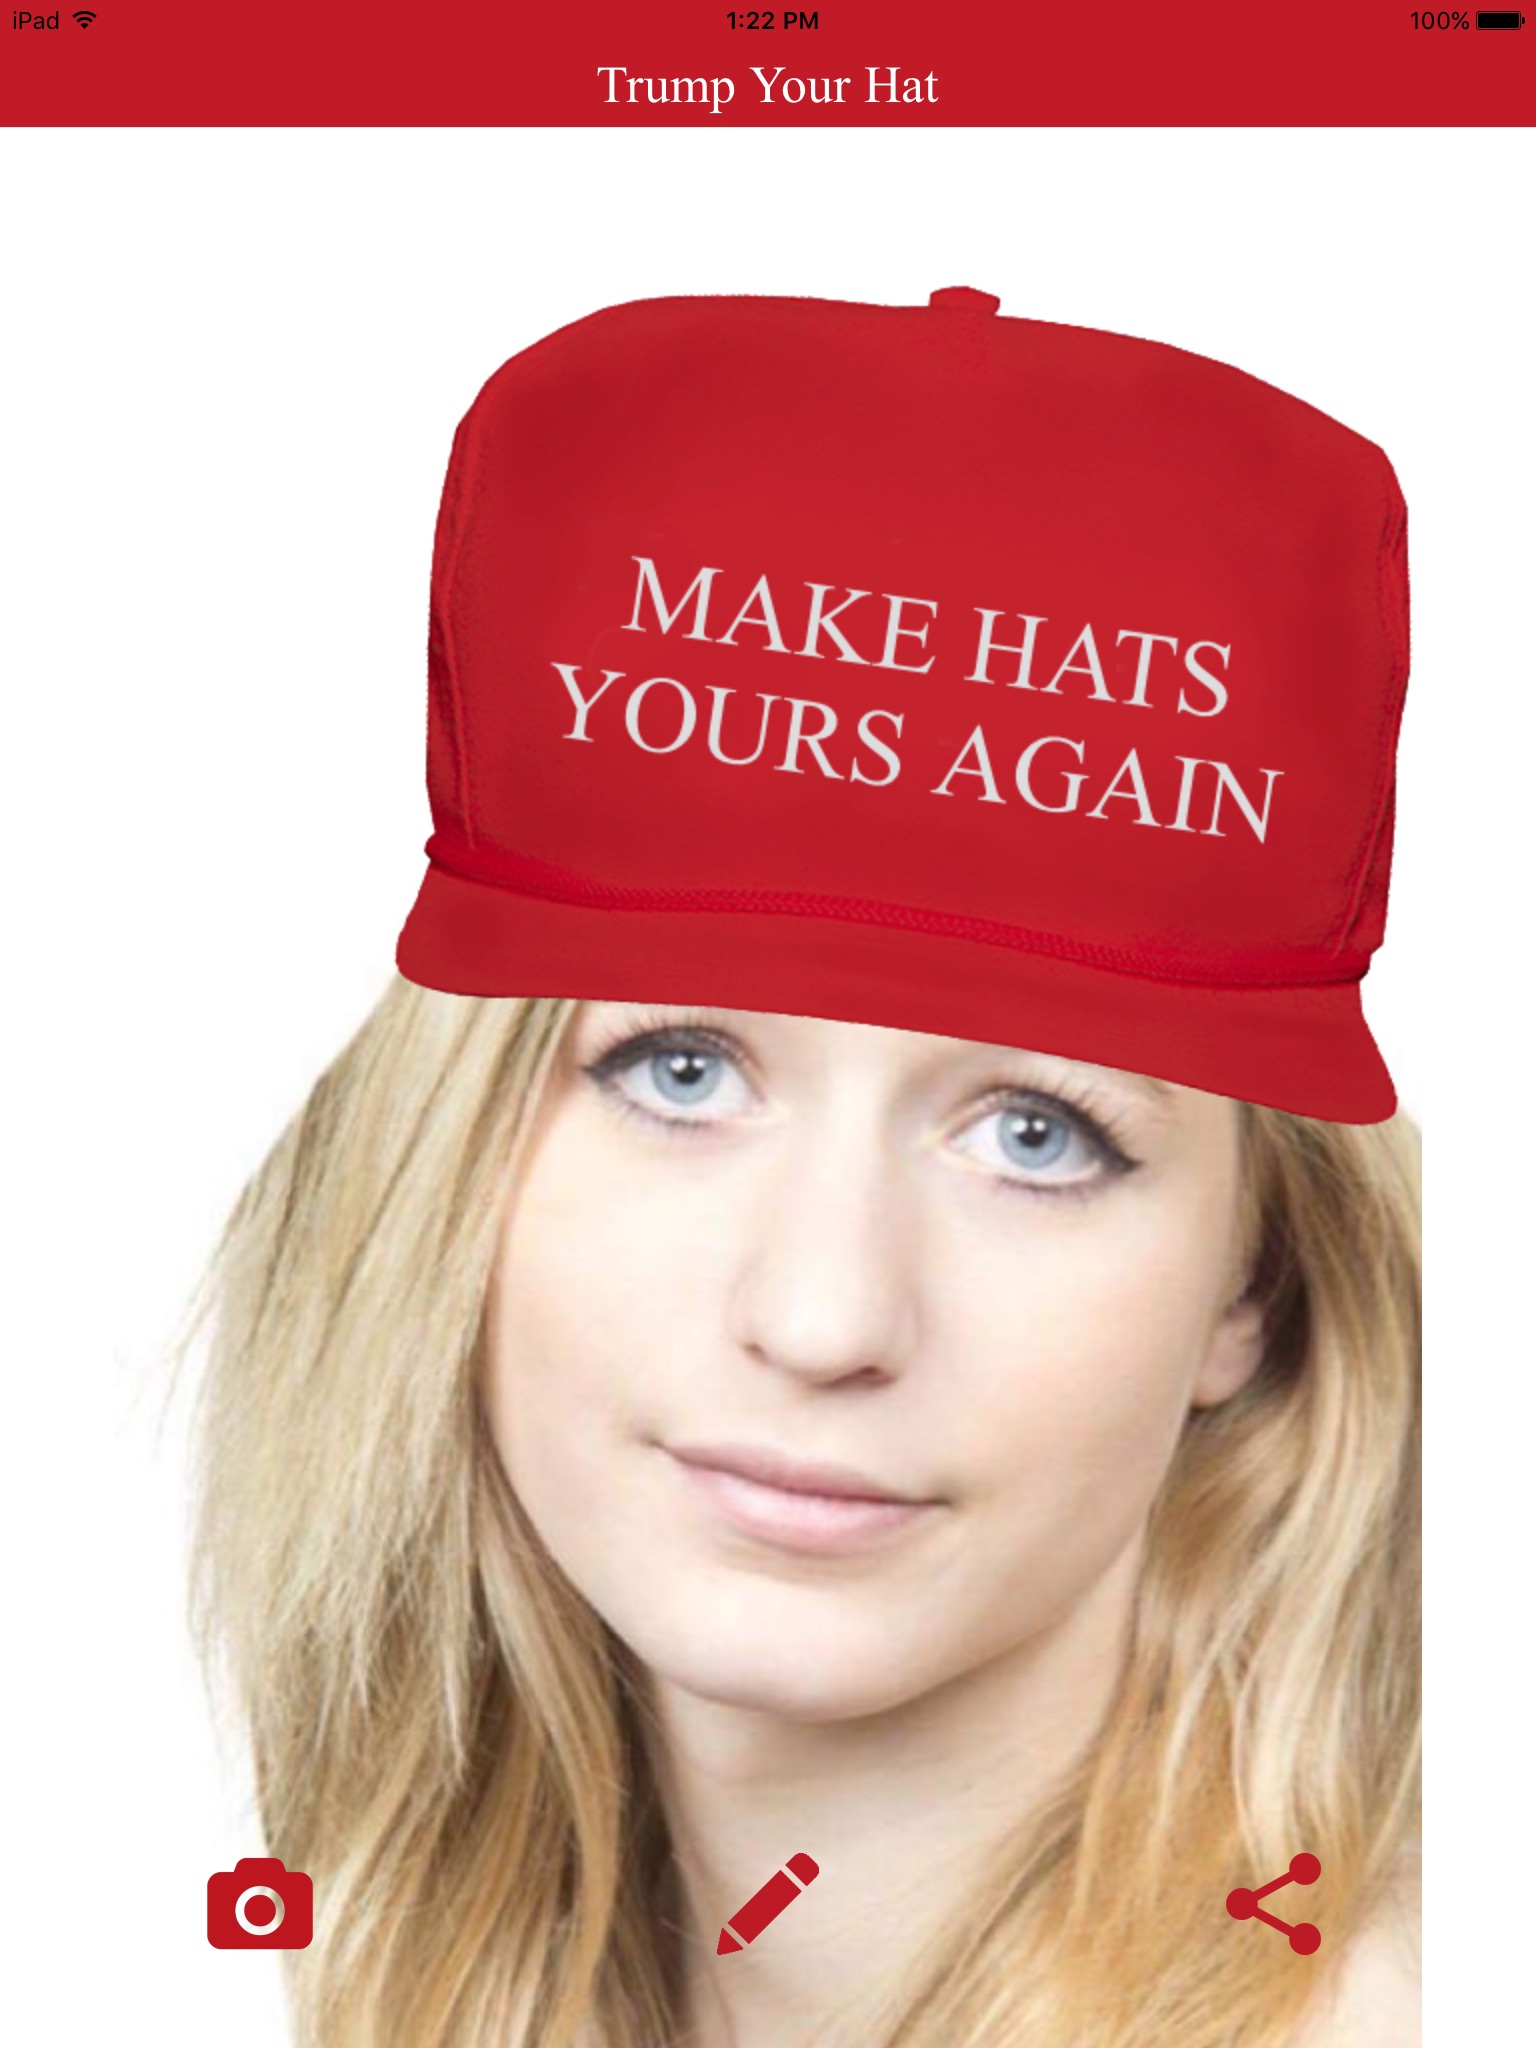 Trump Your Hat screenshot 3